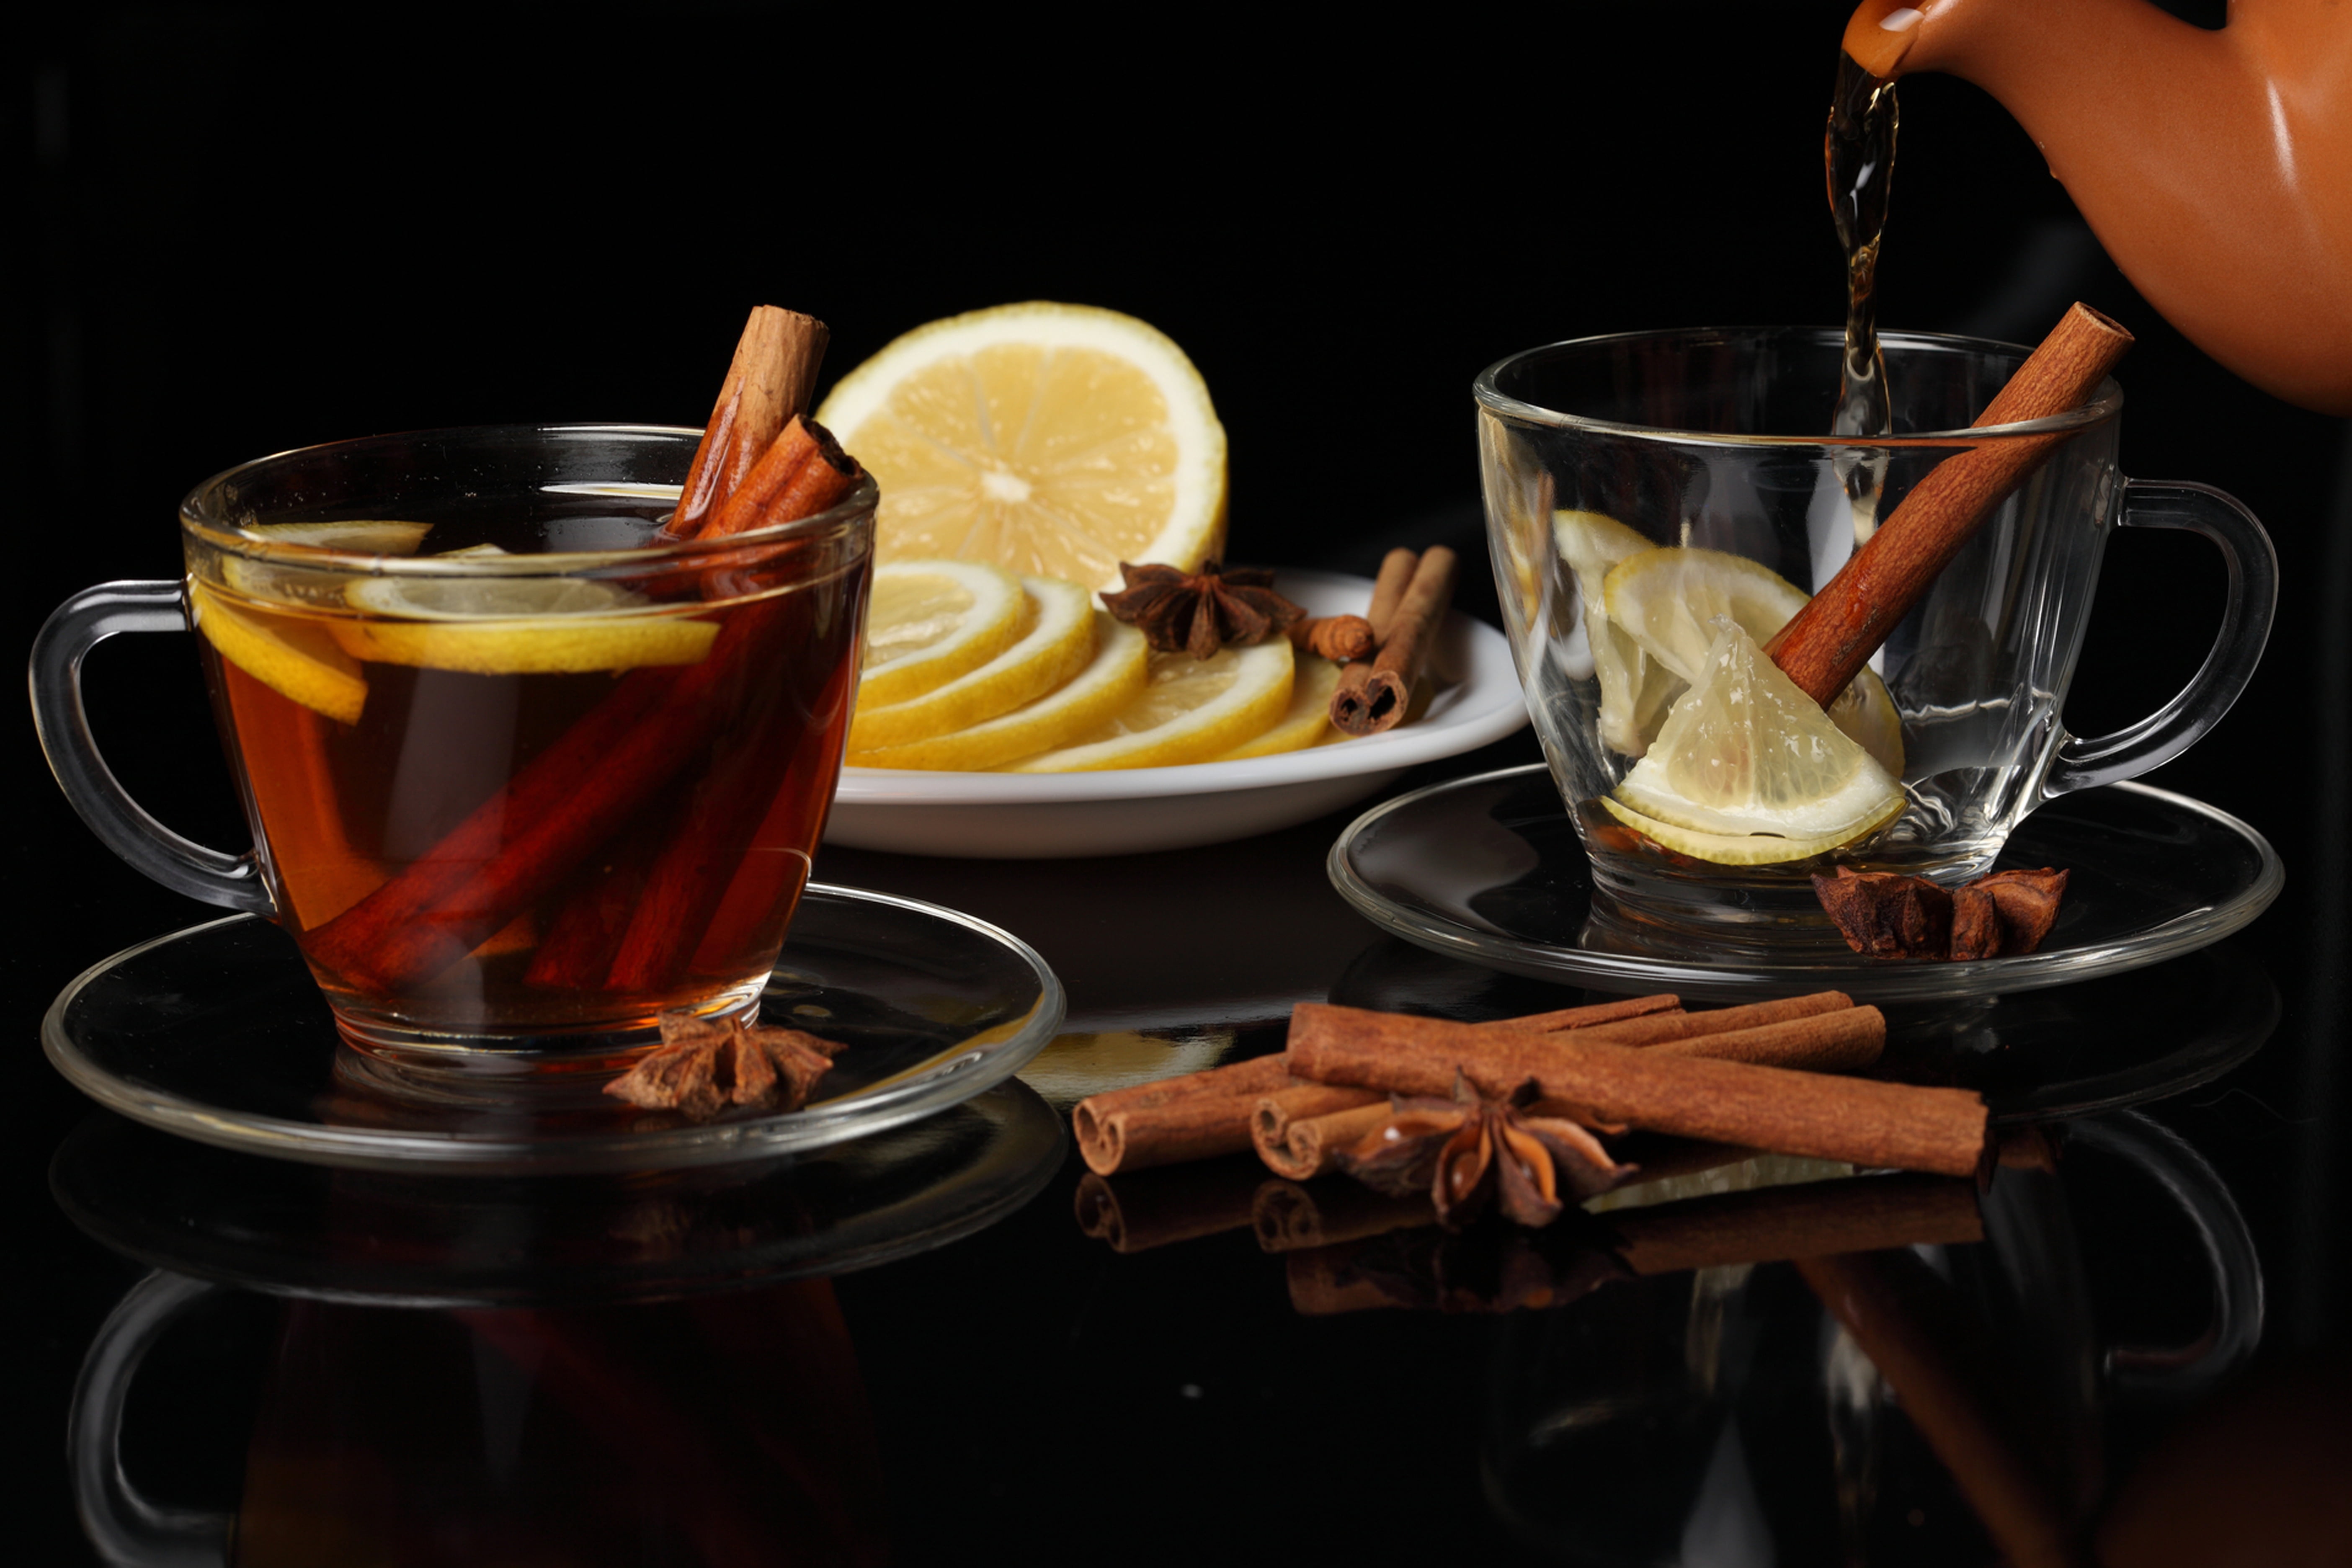 clear glass teacup and saucers, drink, service, cinnamon, lemon